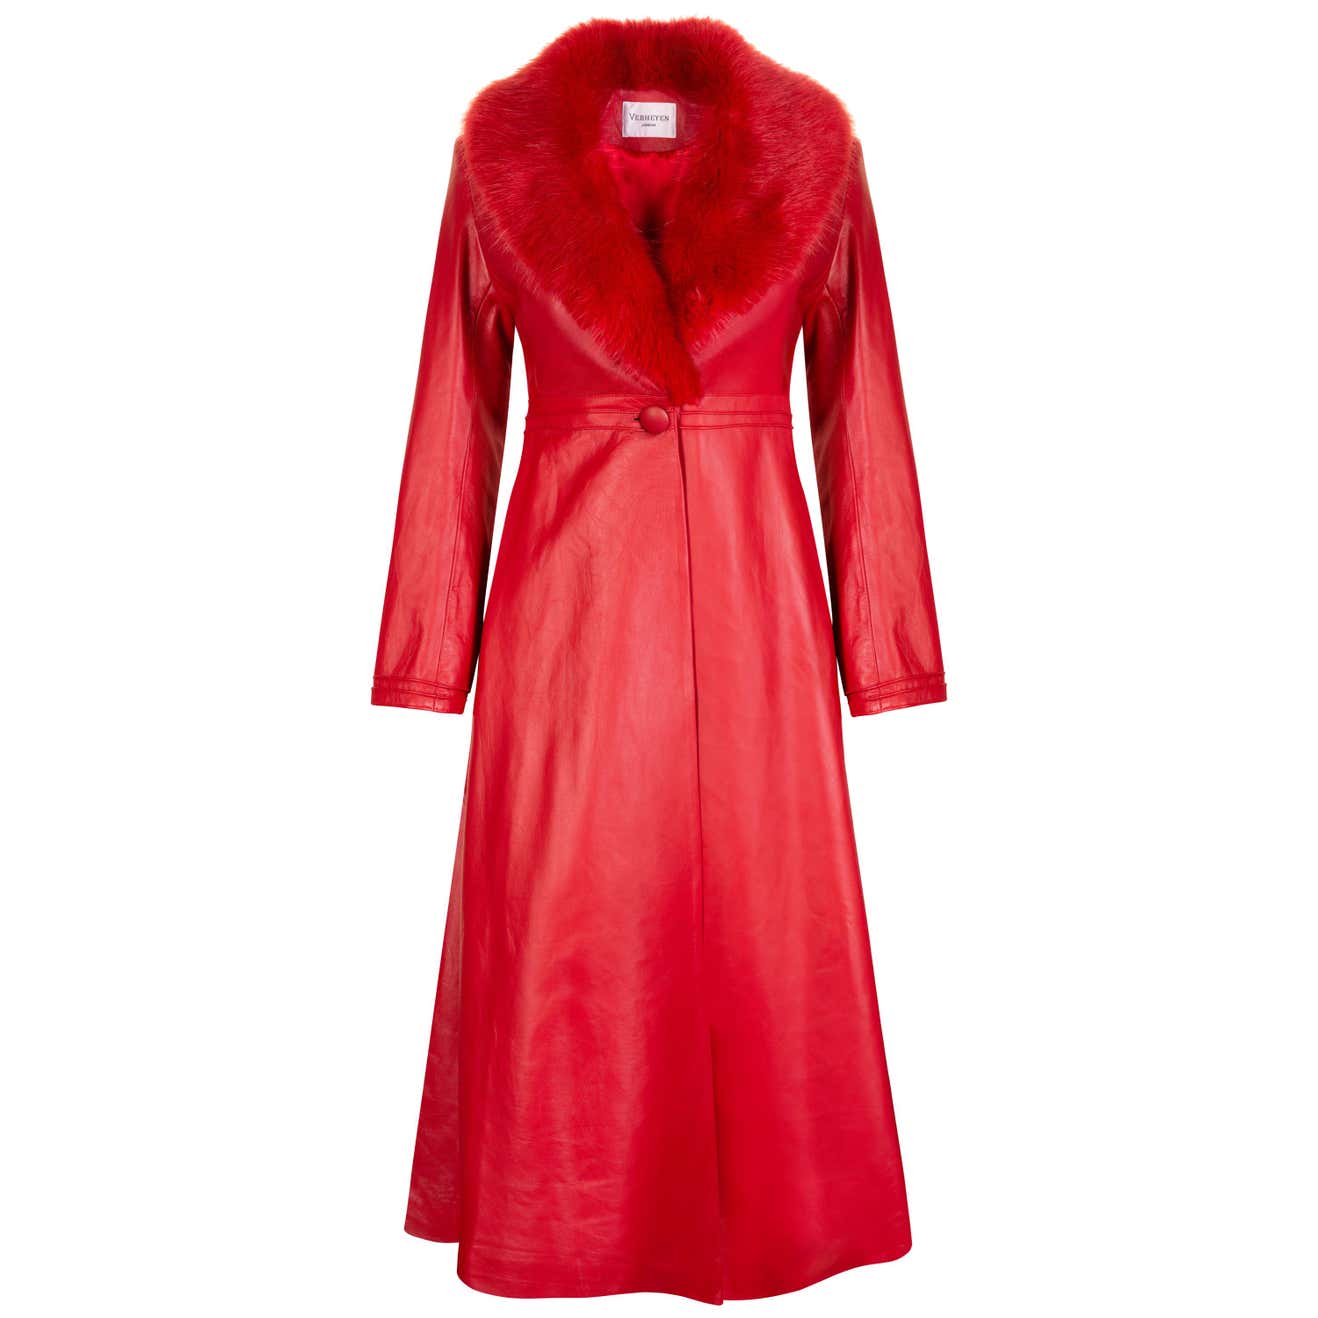 Verheyen London Edward Leather Coat with Faux Fur Collar in Red - Size ...